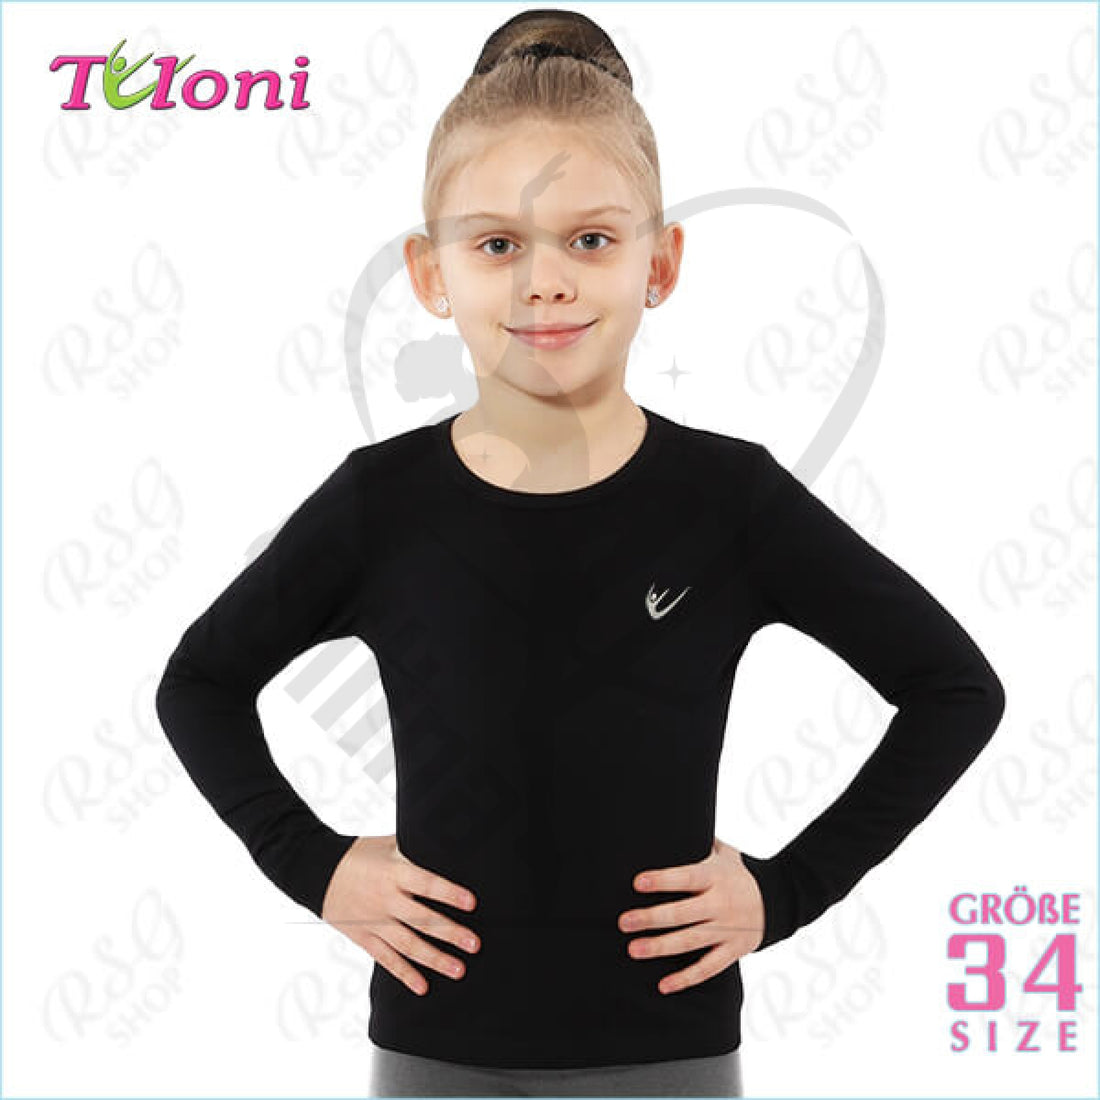 Tuloni Long Sleeve Top 34 (122-128) T Shirts & Tops